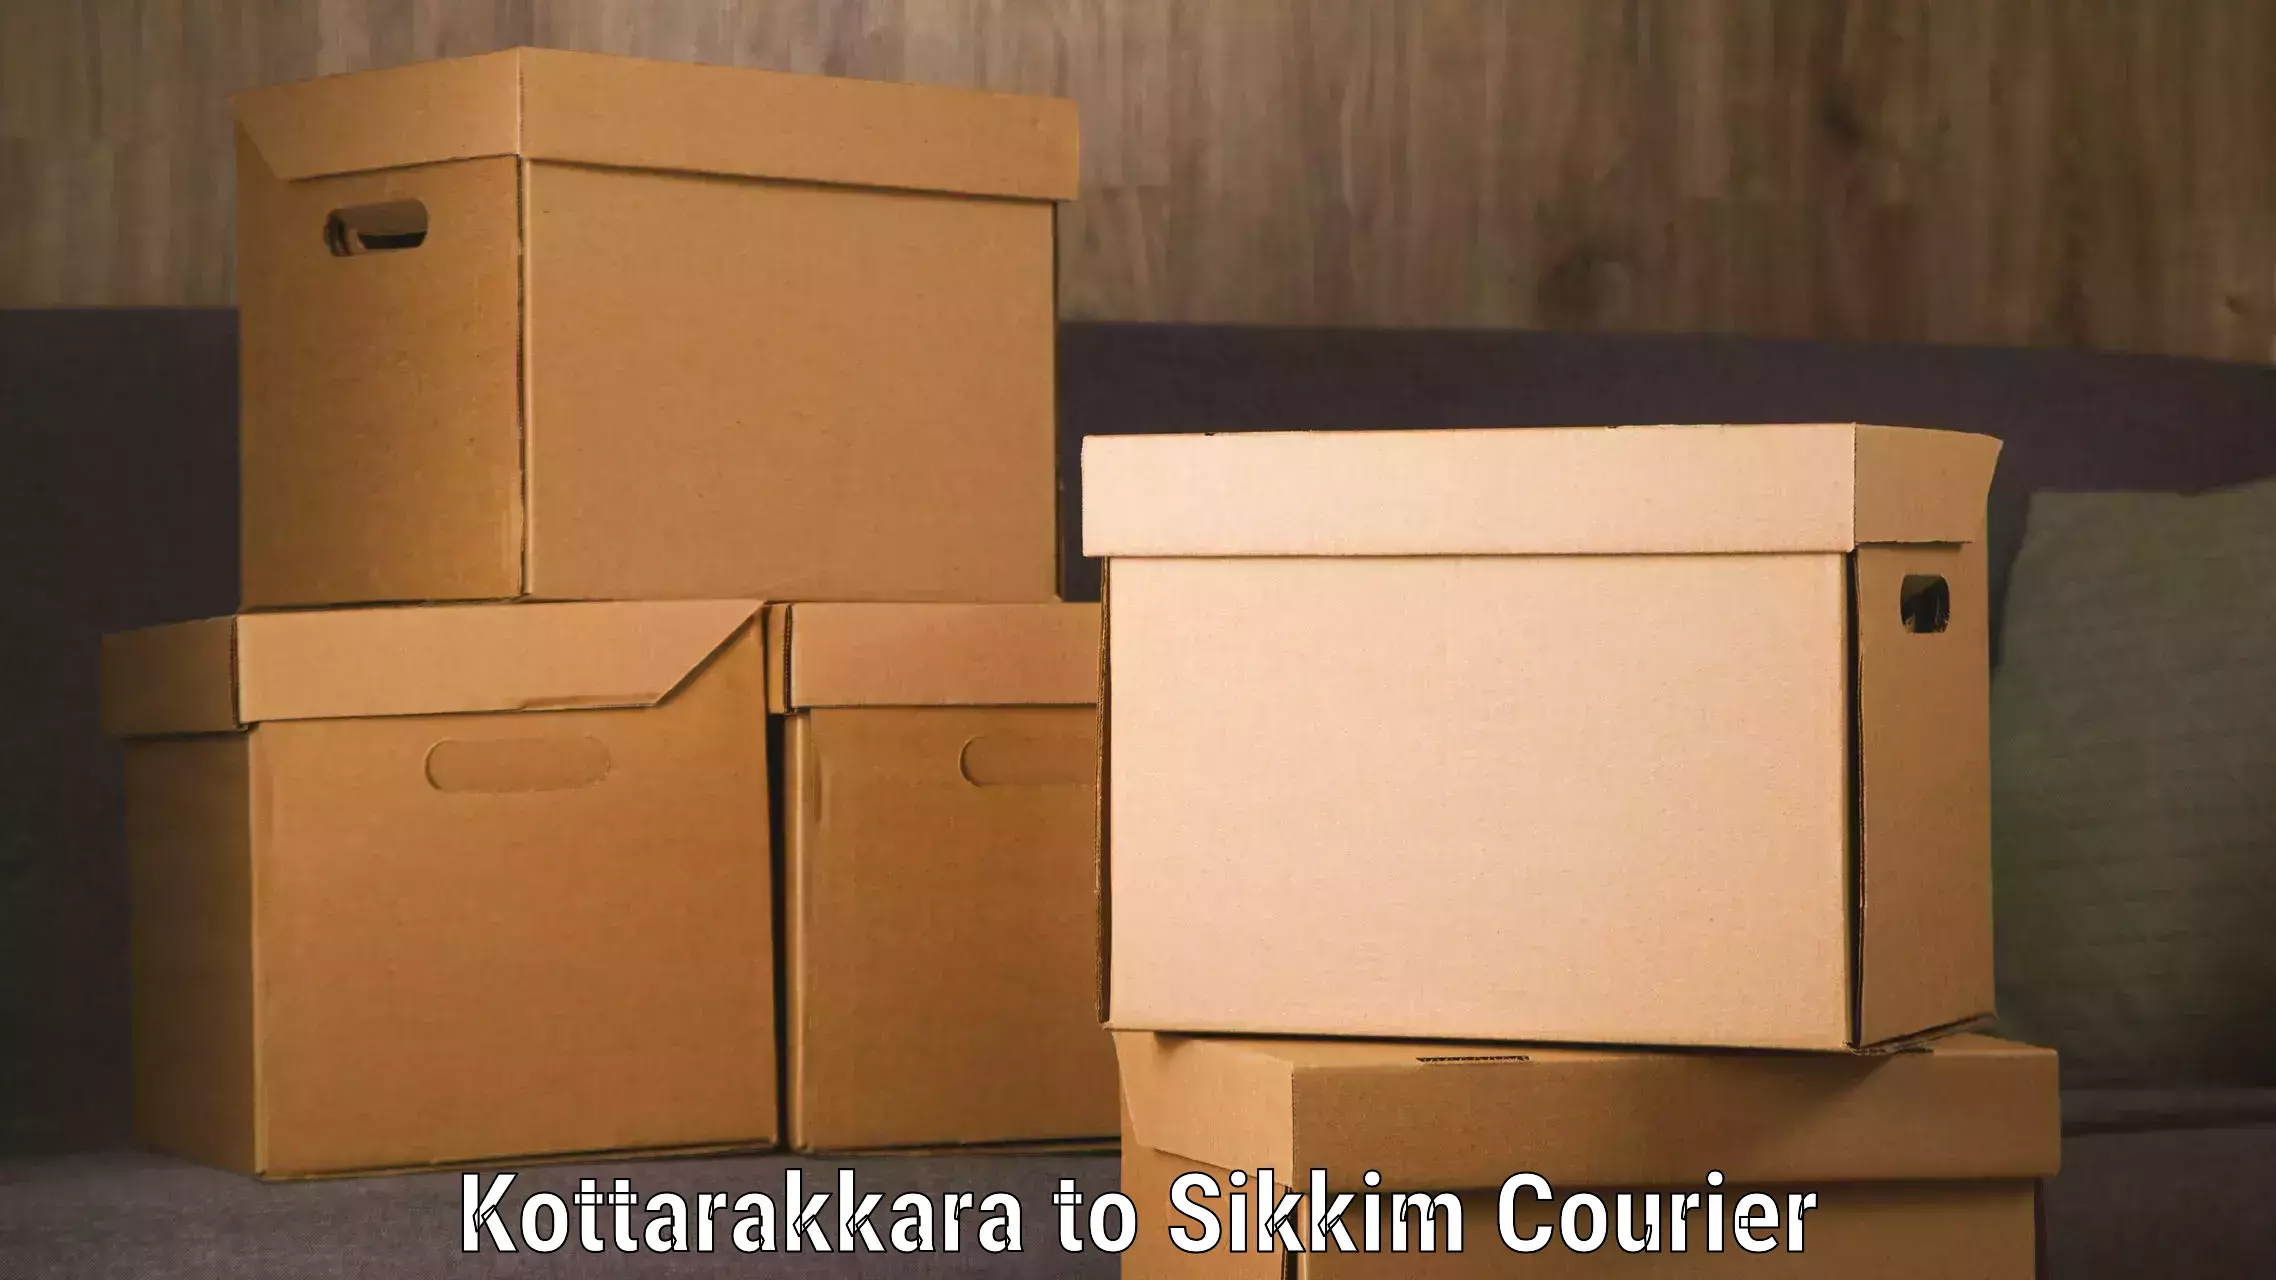 High-performance logistics Kottarakkara to Sikkim